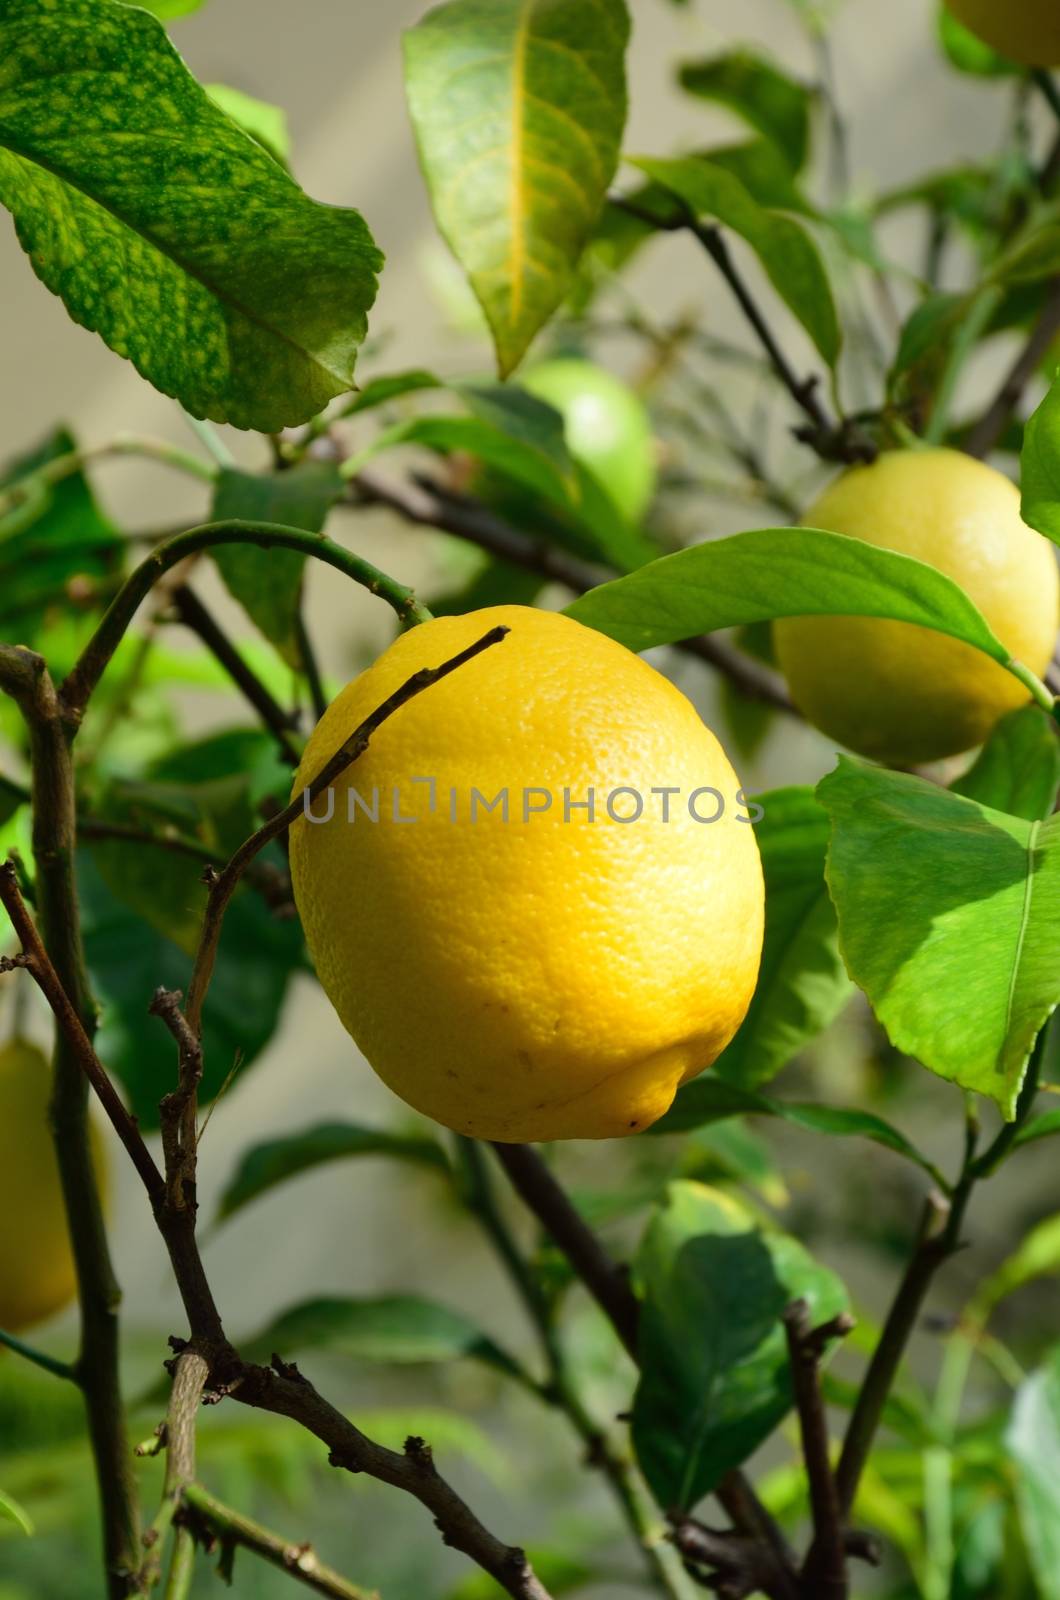 Lemon on tree green